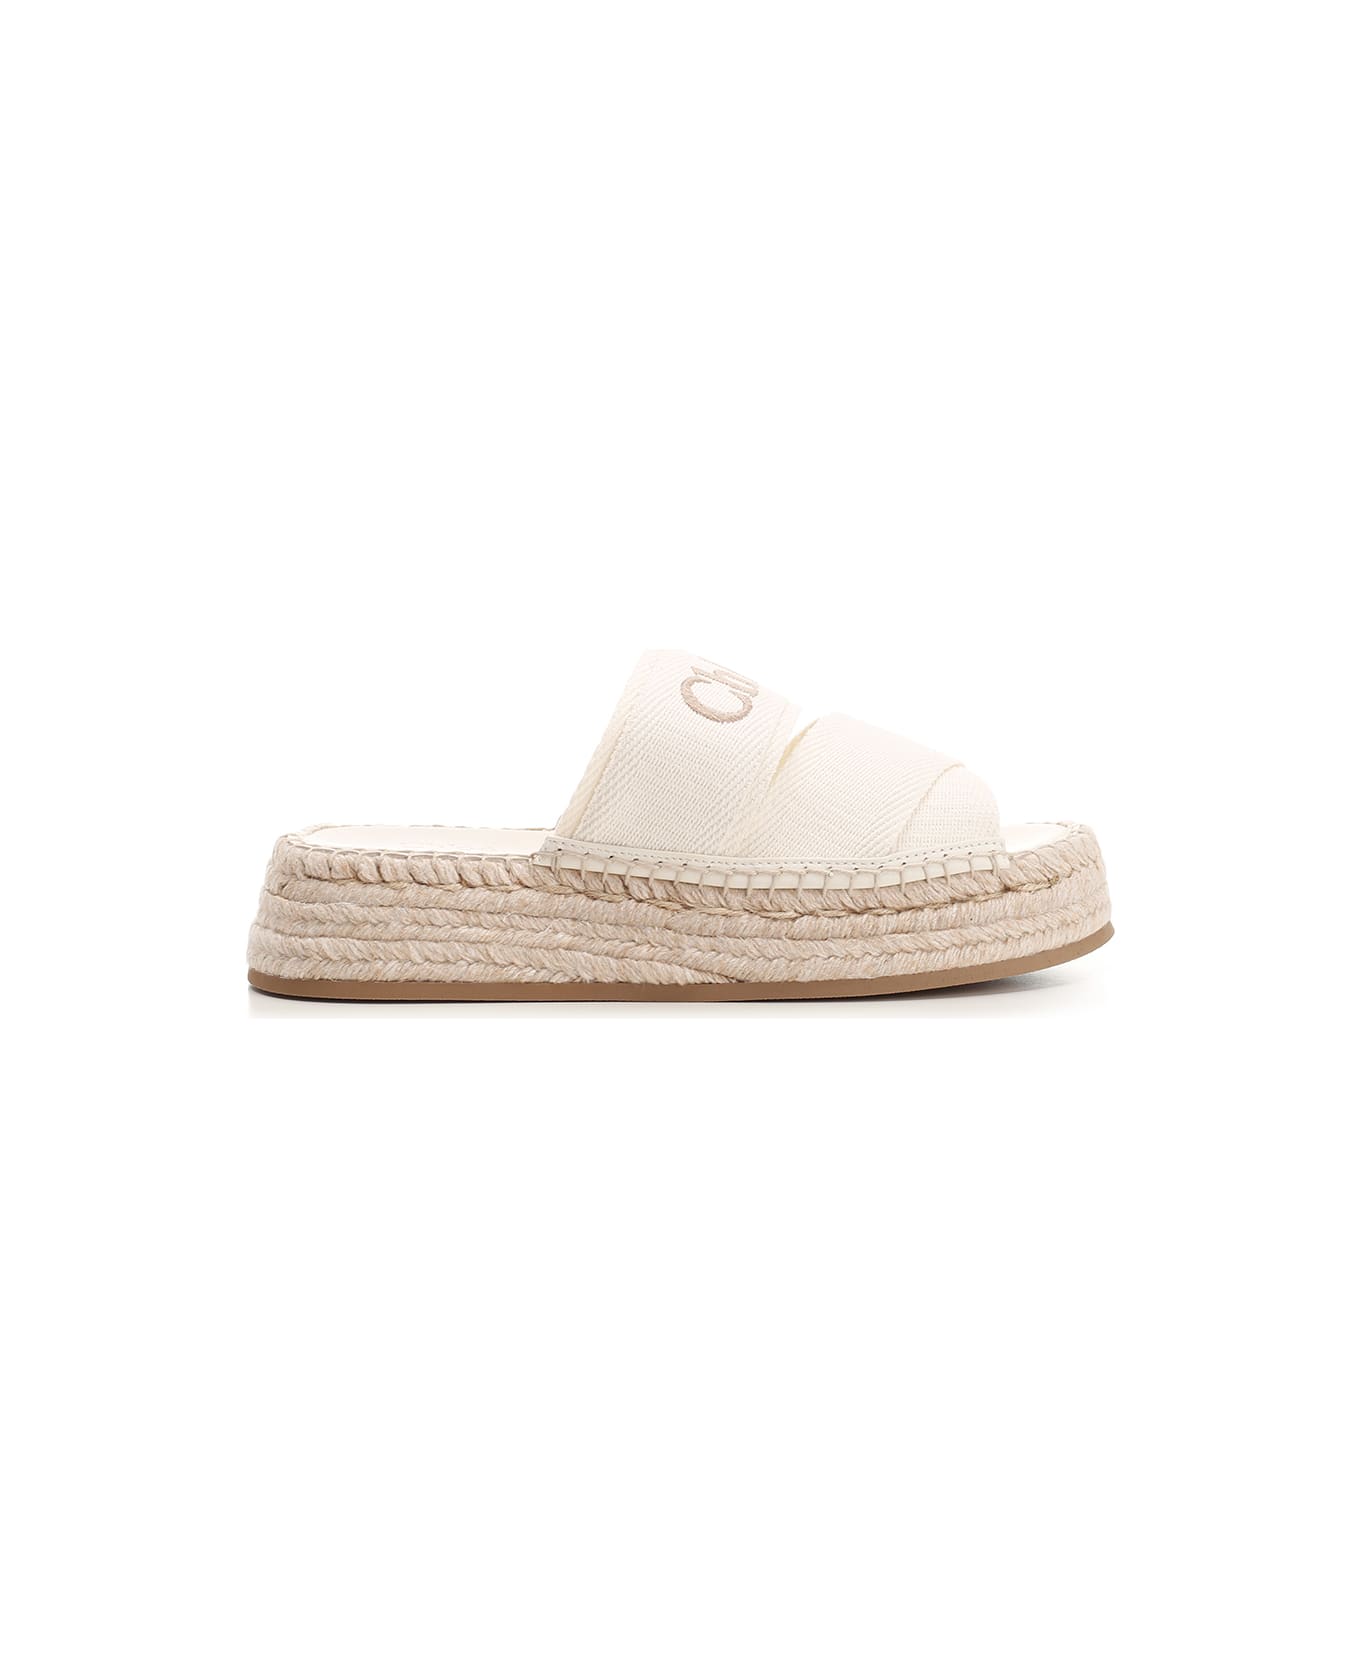 Chloé 'mila' Flatform Sandal - White